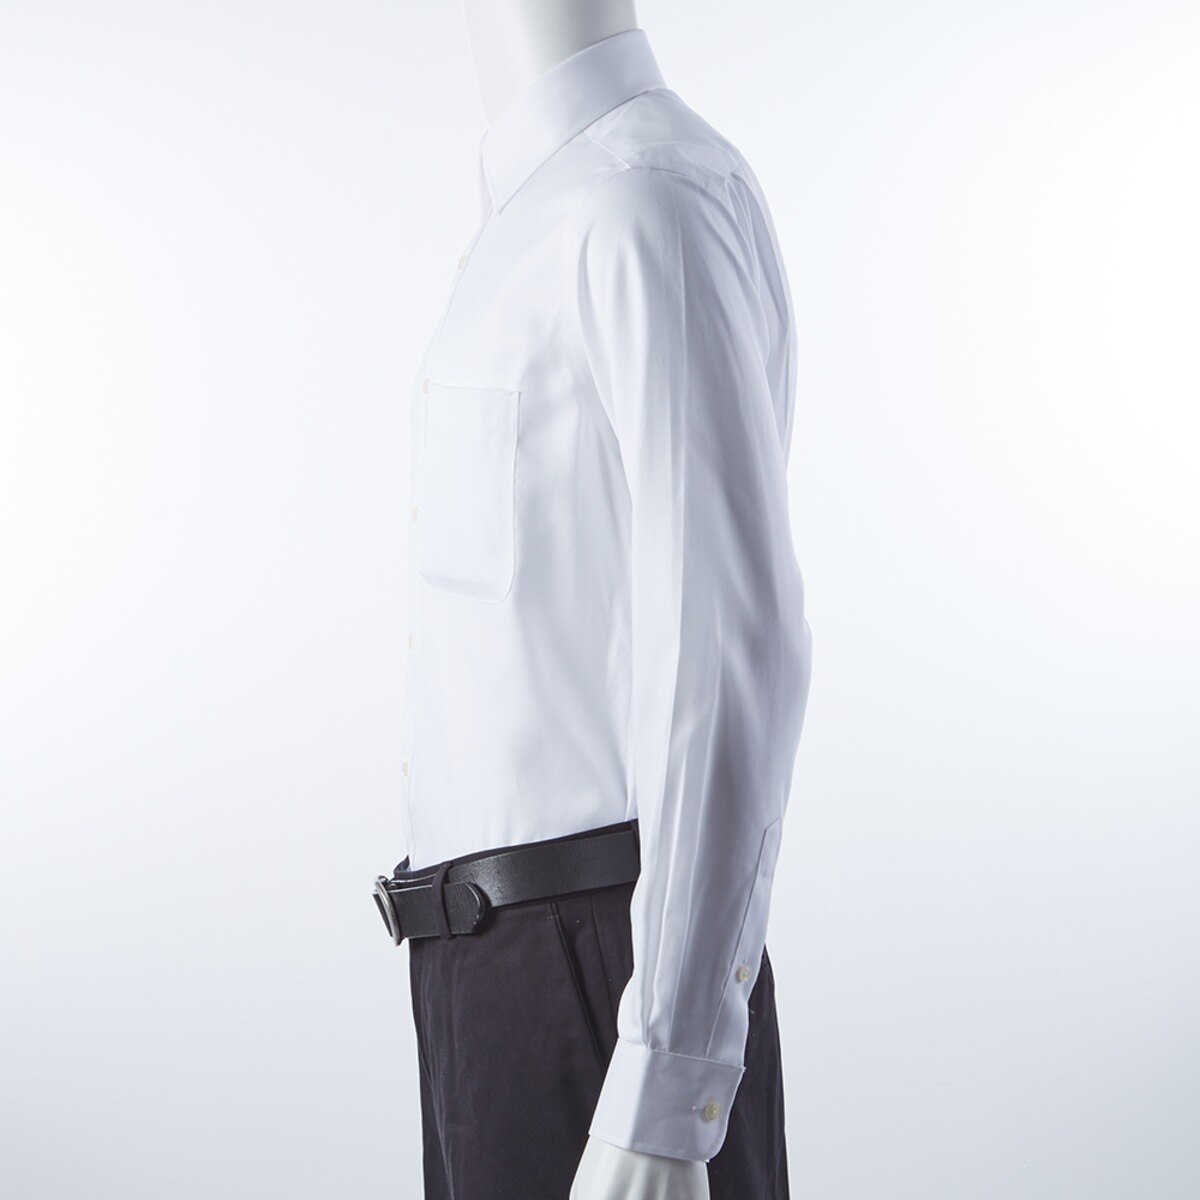 Kirkland Signature 科克蘭 男長袖標準領免燙襯衫 白色 領圍16.5吋 X 袖長 34/35吋